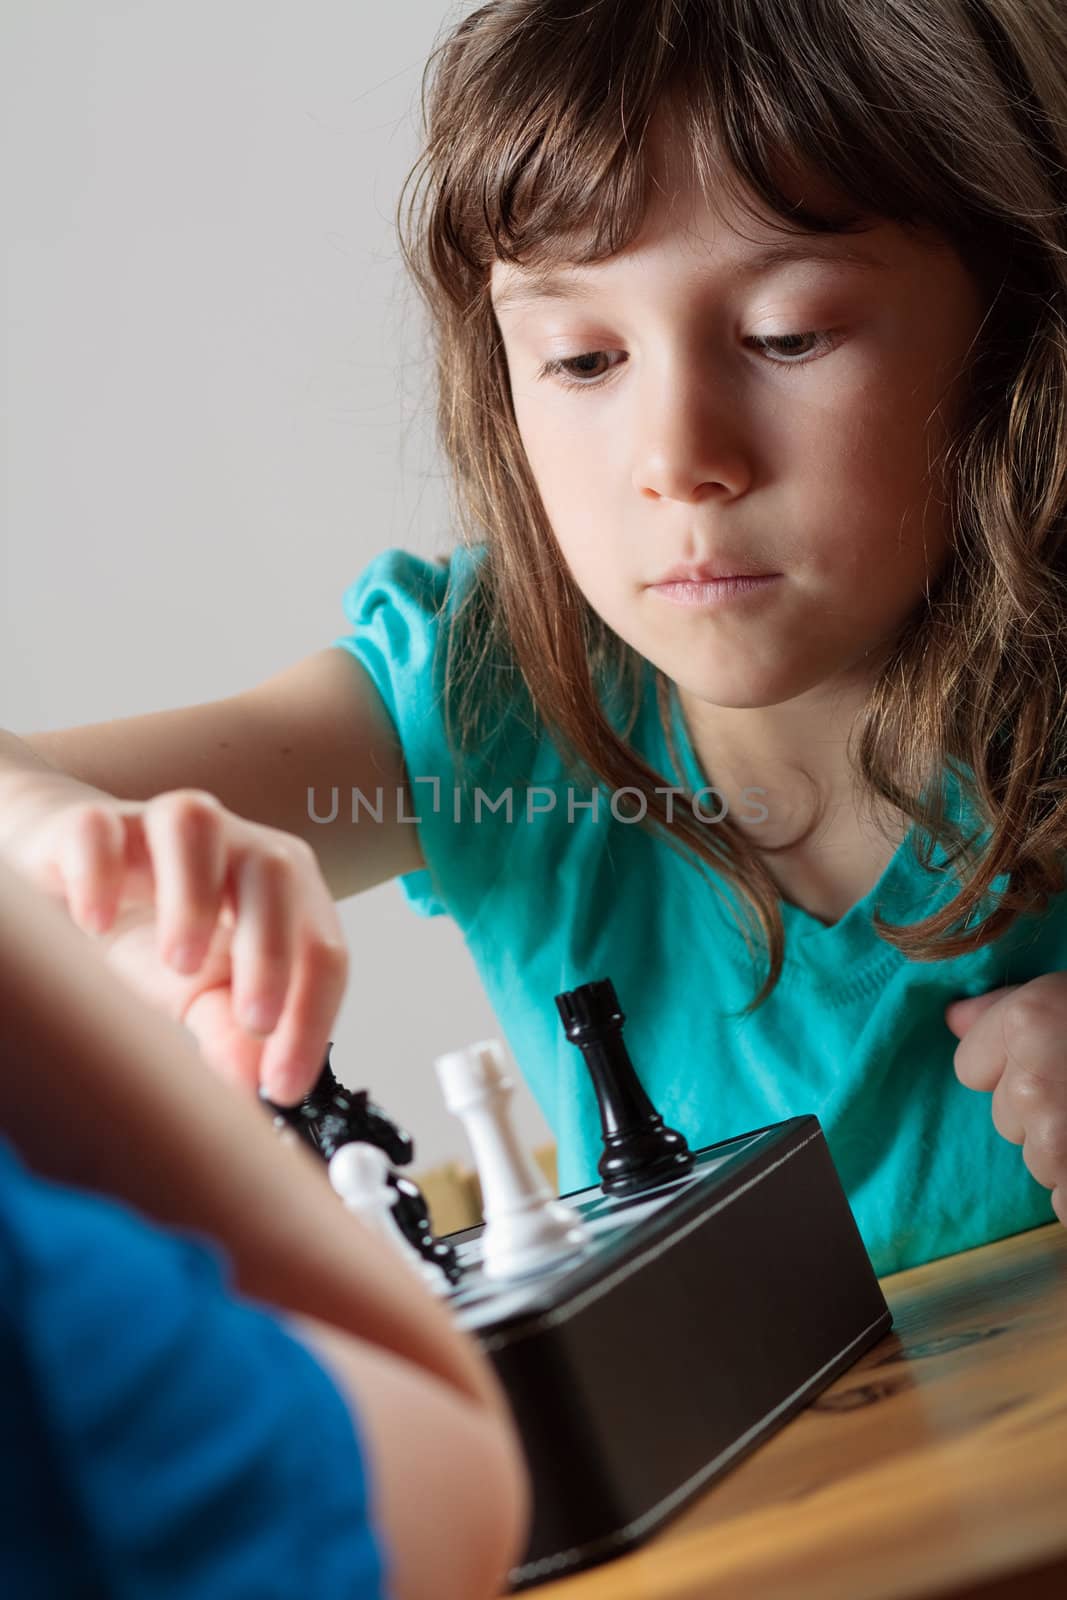 Cute little girl playing chess